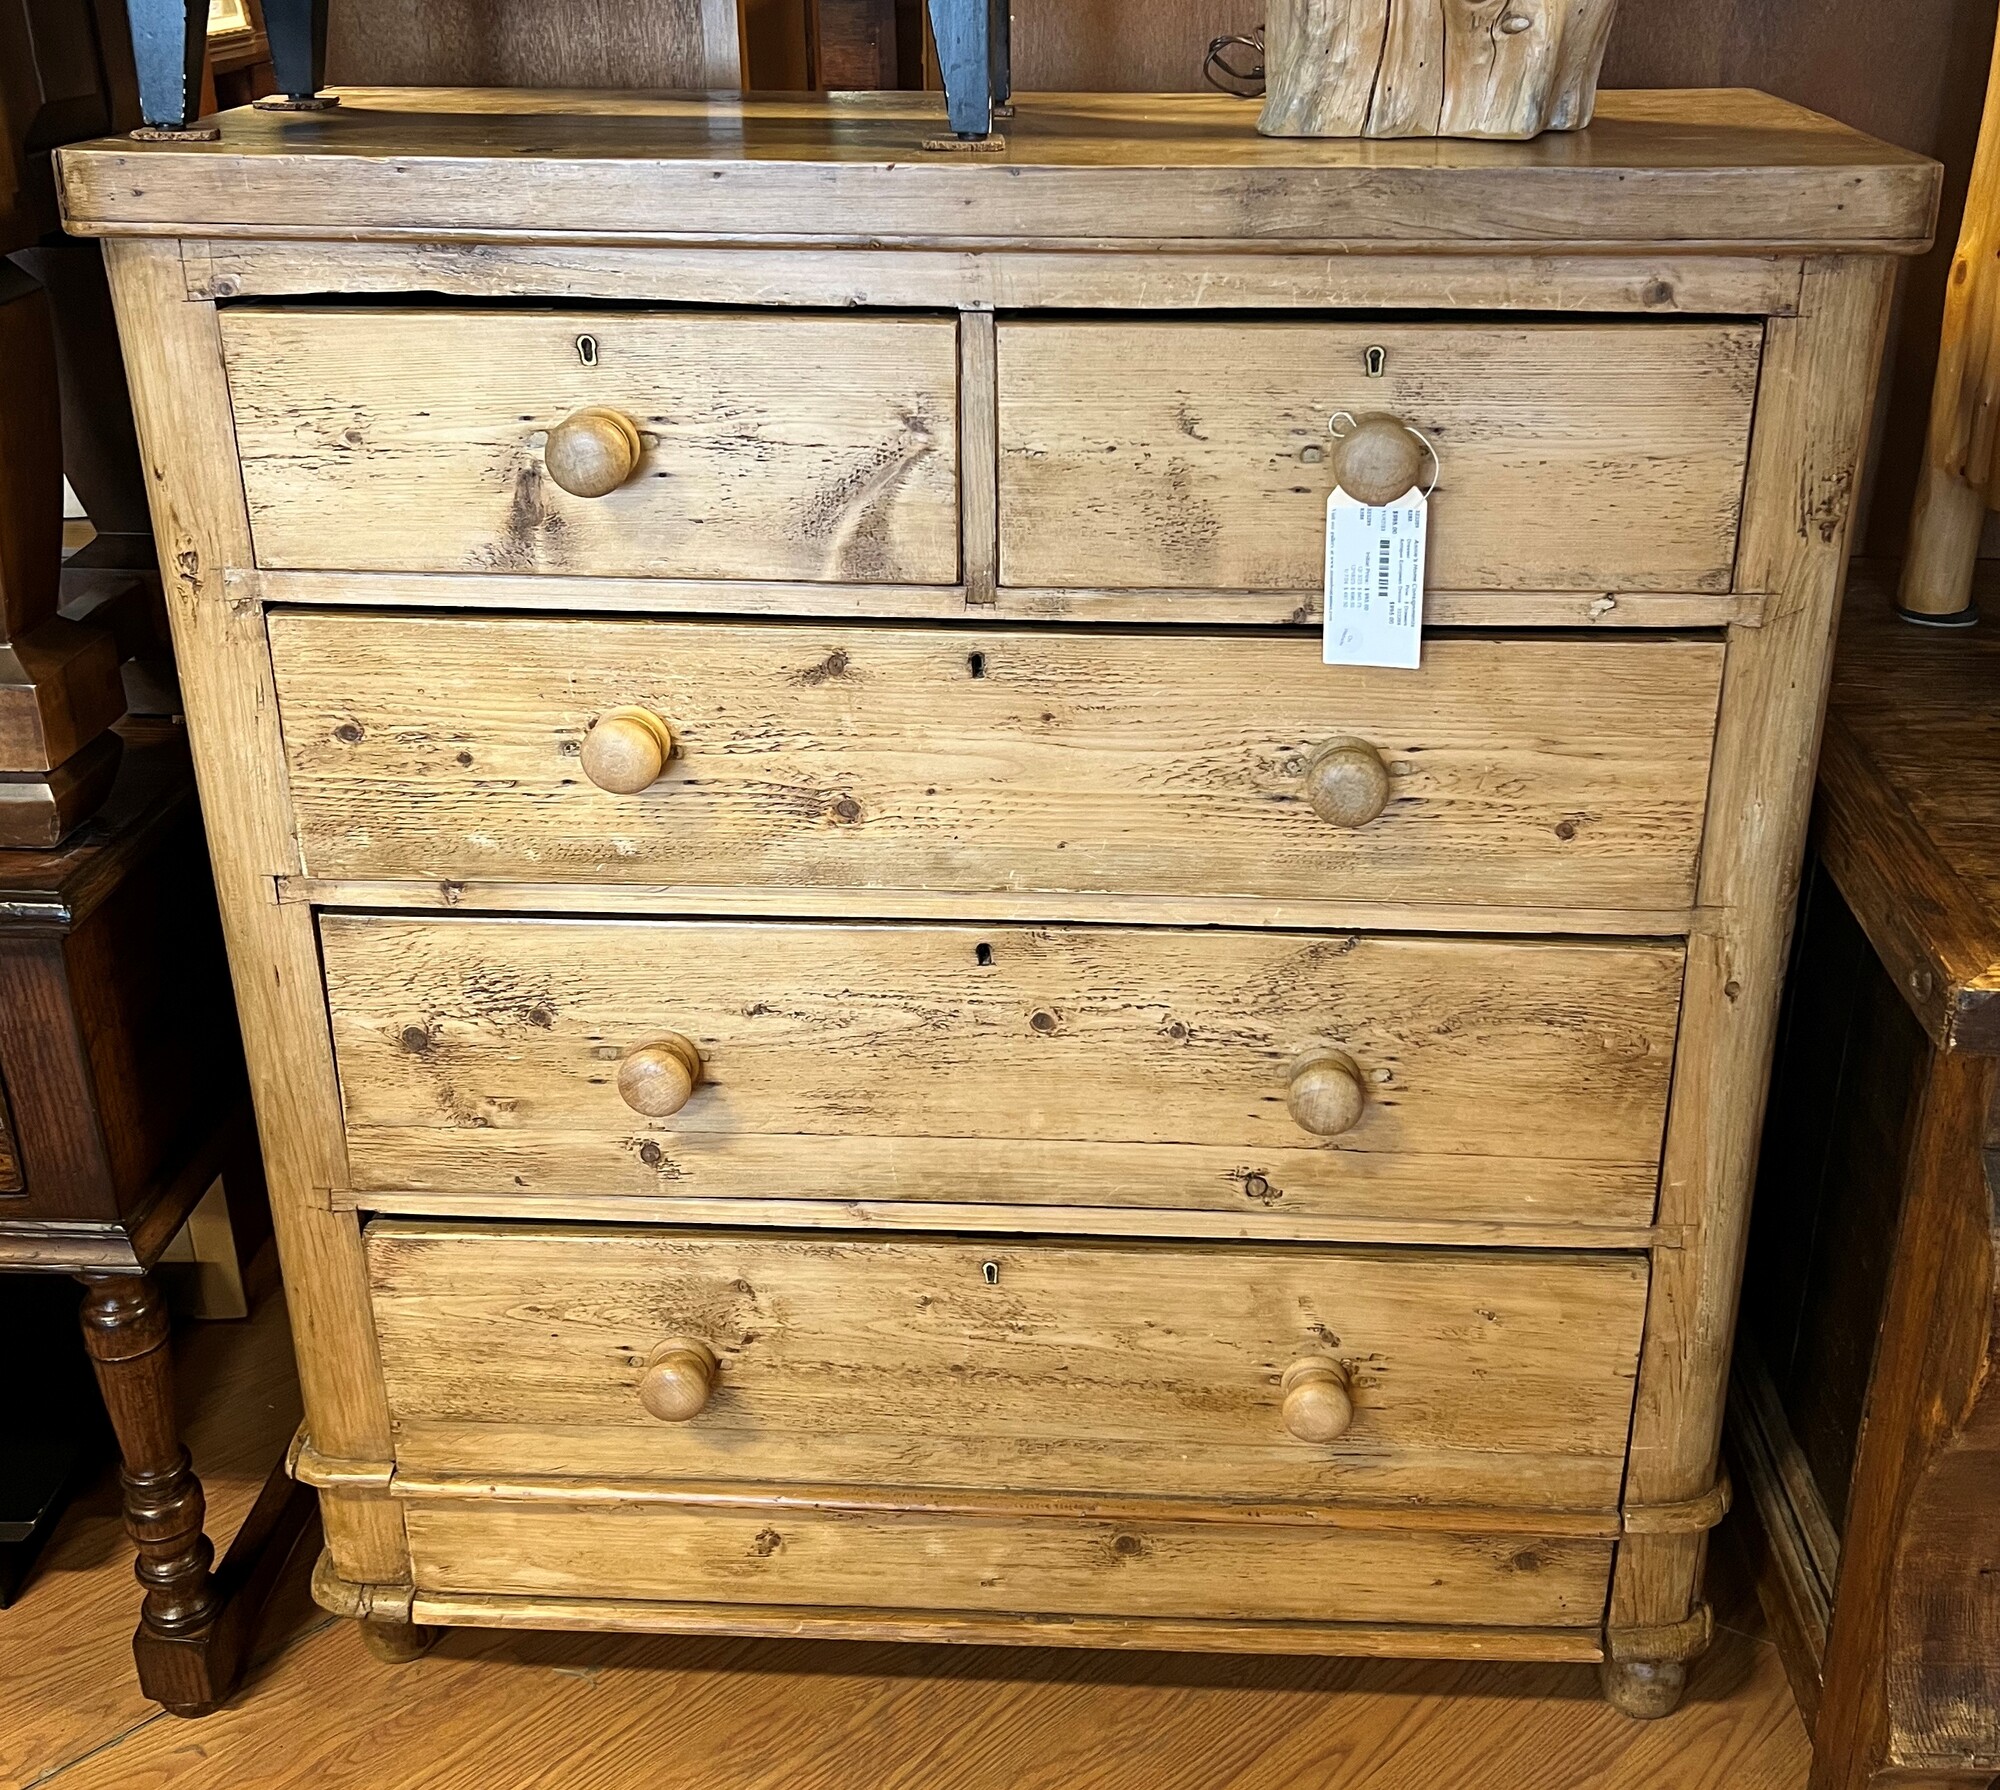 Antique European Dresser, Pine, 5 Drawers
44.5in x 18.5in x 48.5in